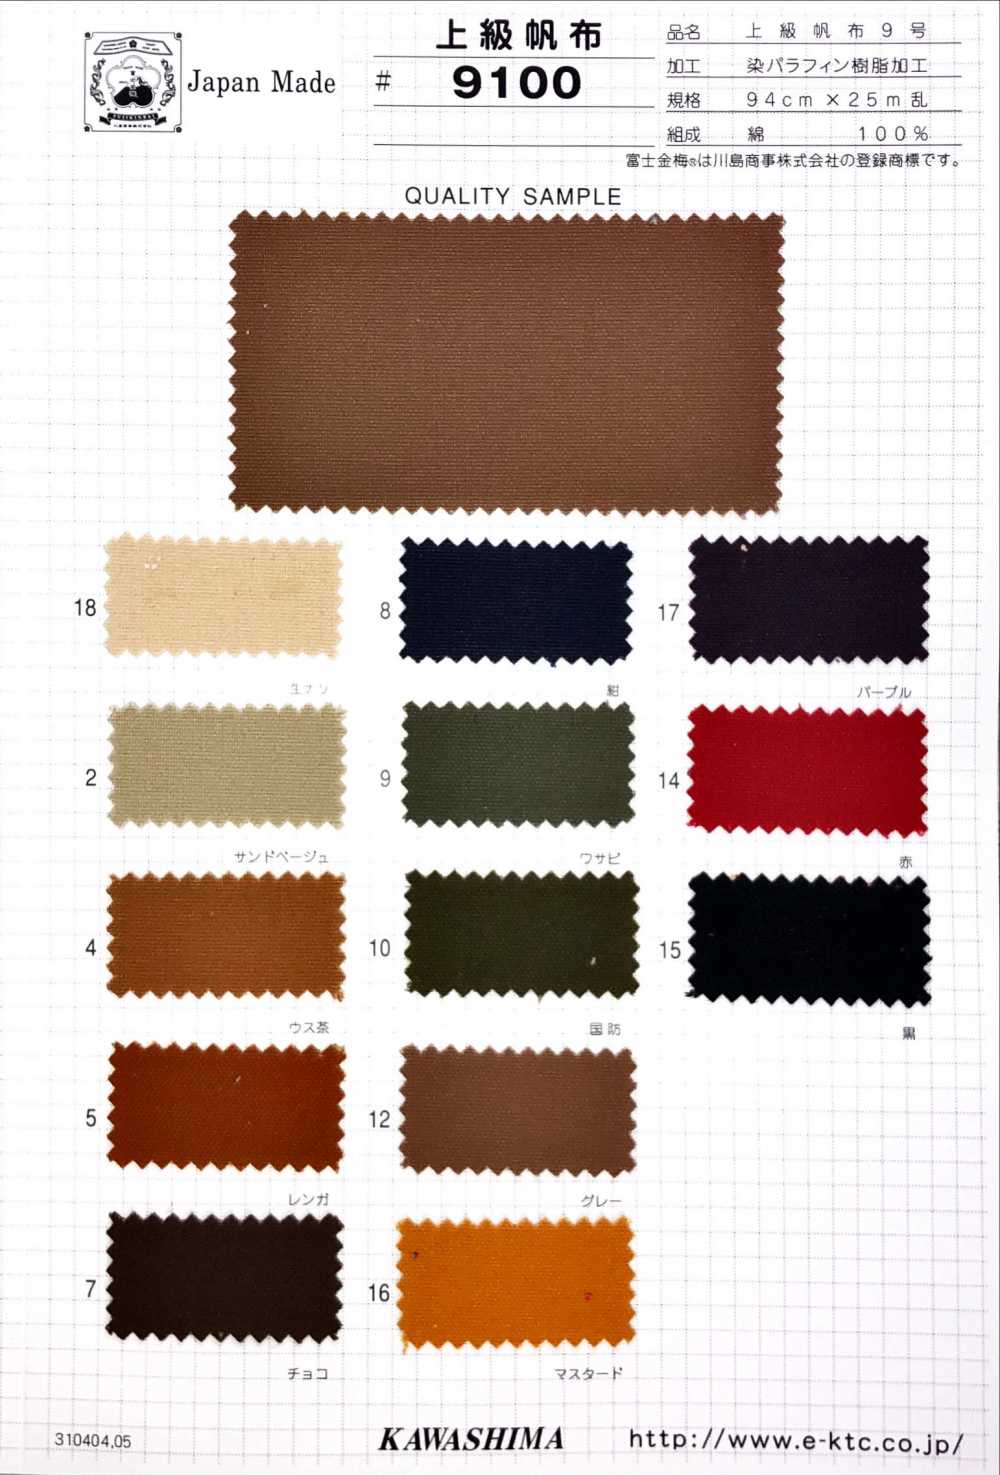 9100 Fuji Kinume Advanced Cotton Canvas No. 9 Paraffin Resin Processing[Fabrication De Textile] Fuji Or Prune